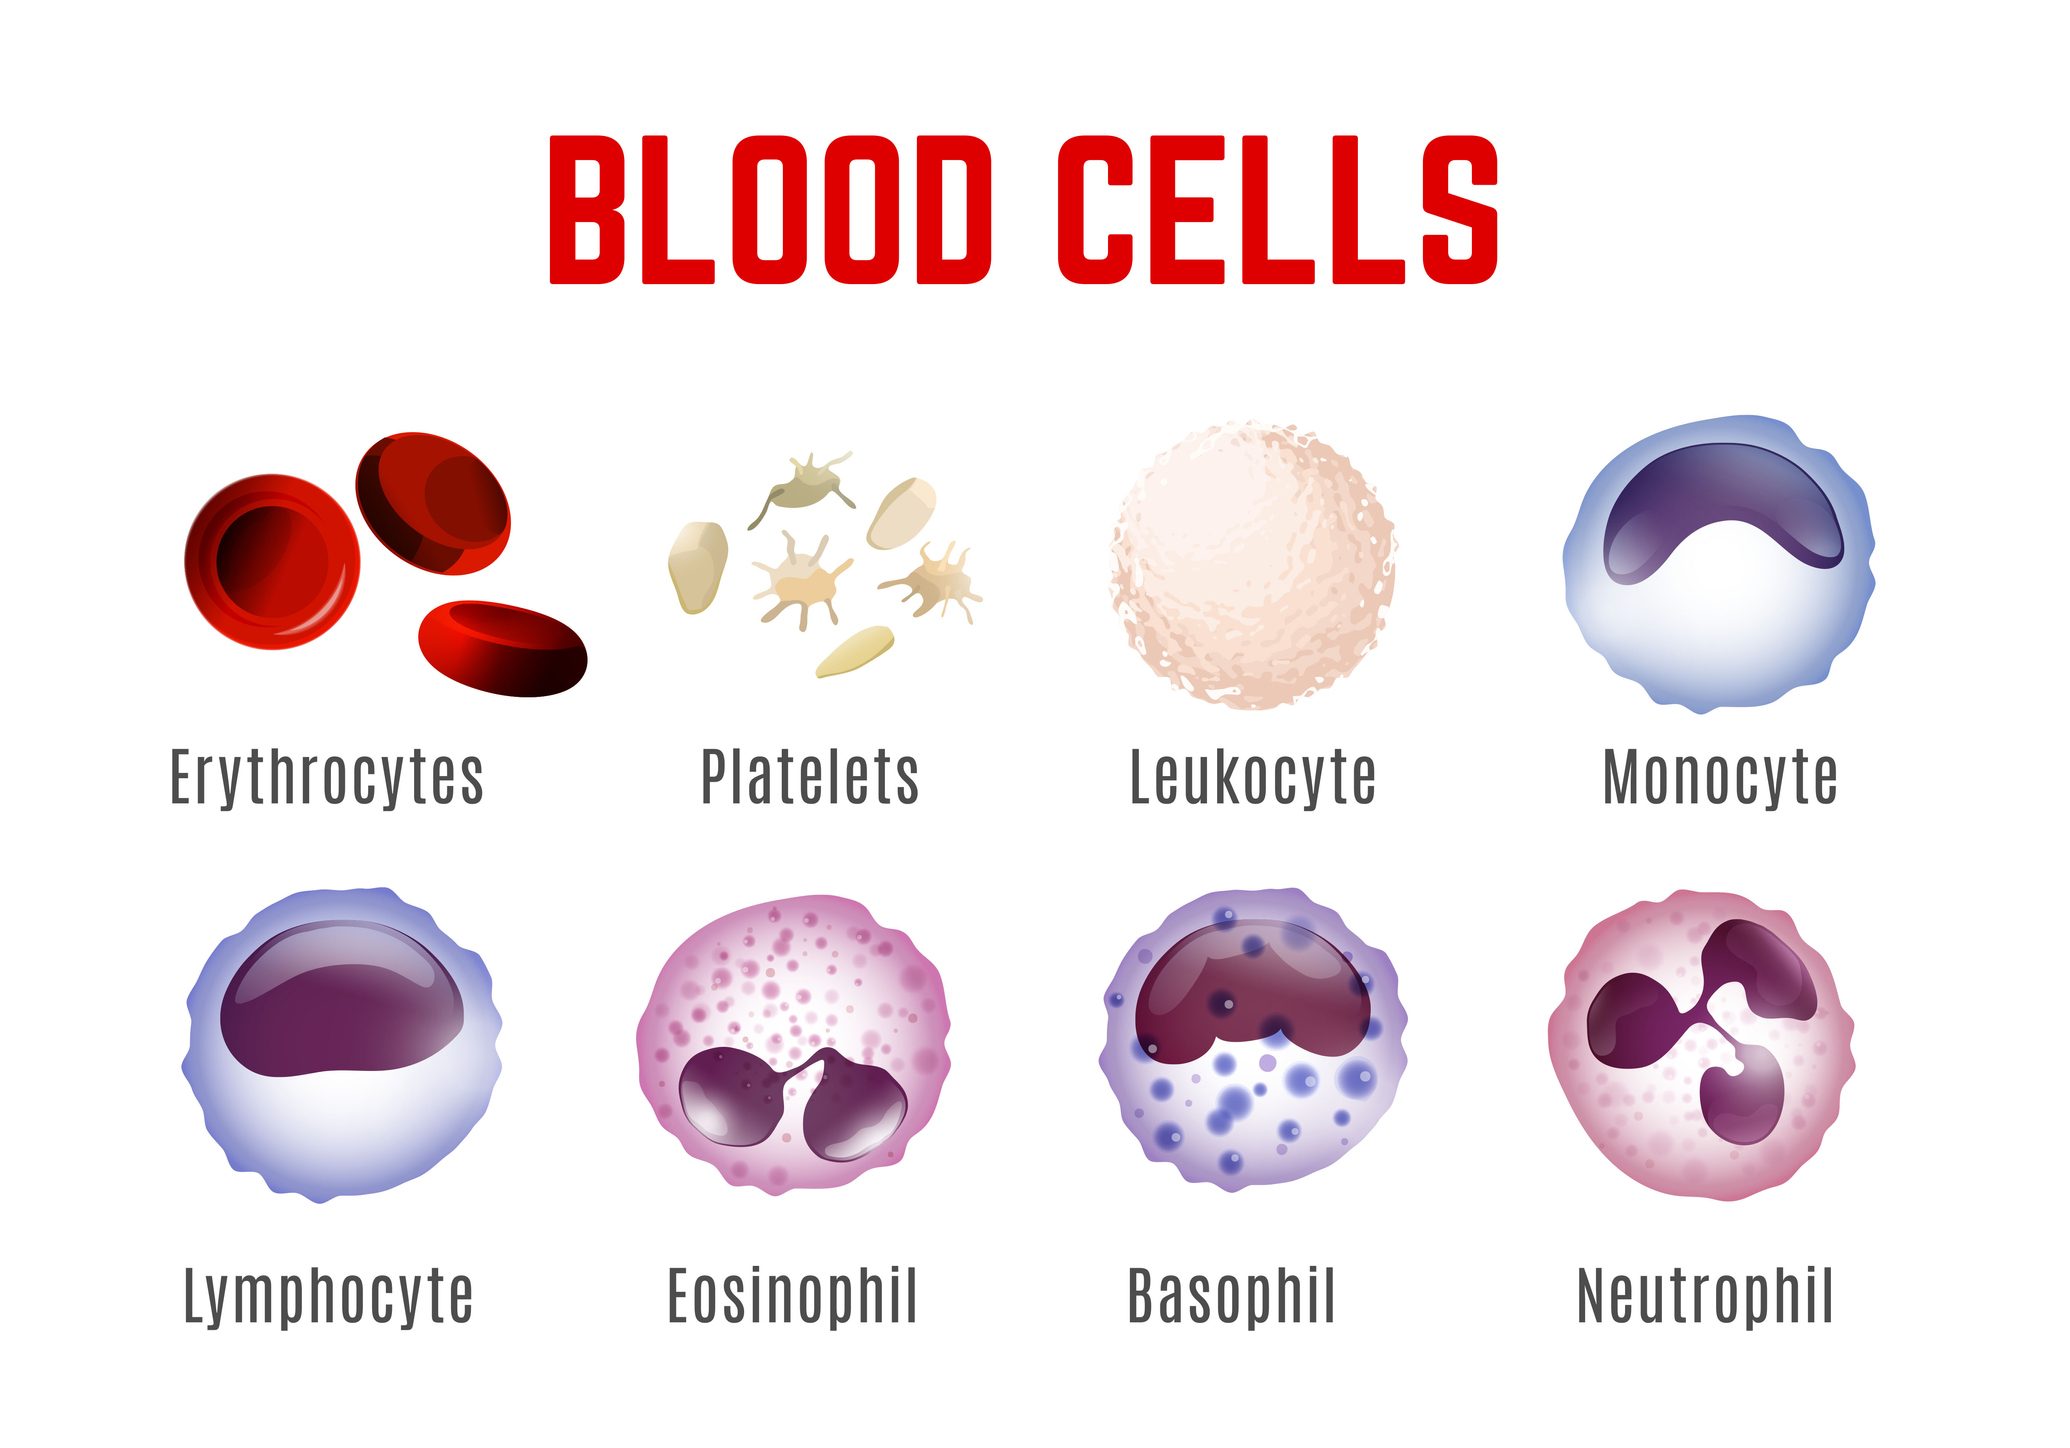 Zobrazení krevních buněk - erytrocyty, trombocyty, leukocyty, monocyty, lymfocyty, eozinofily, bazofily a neutrofily.